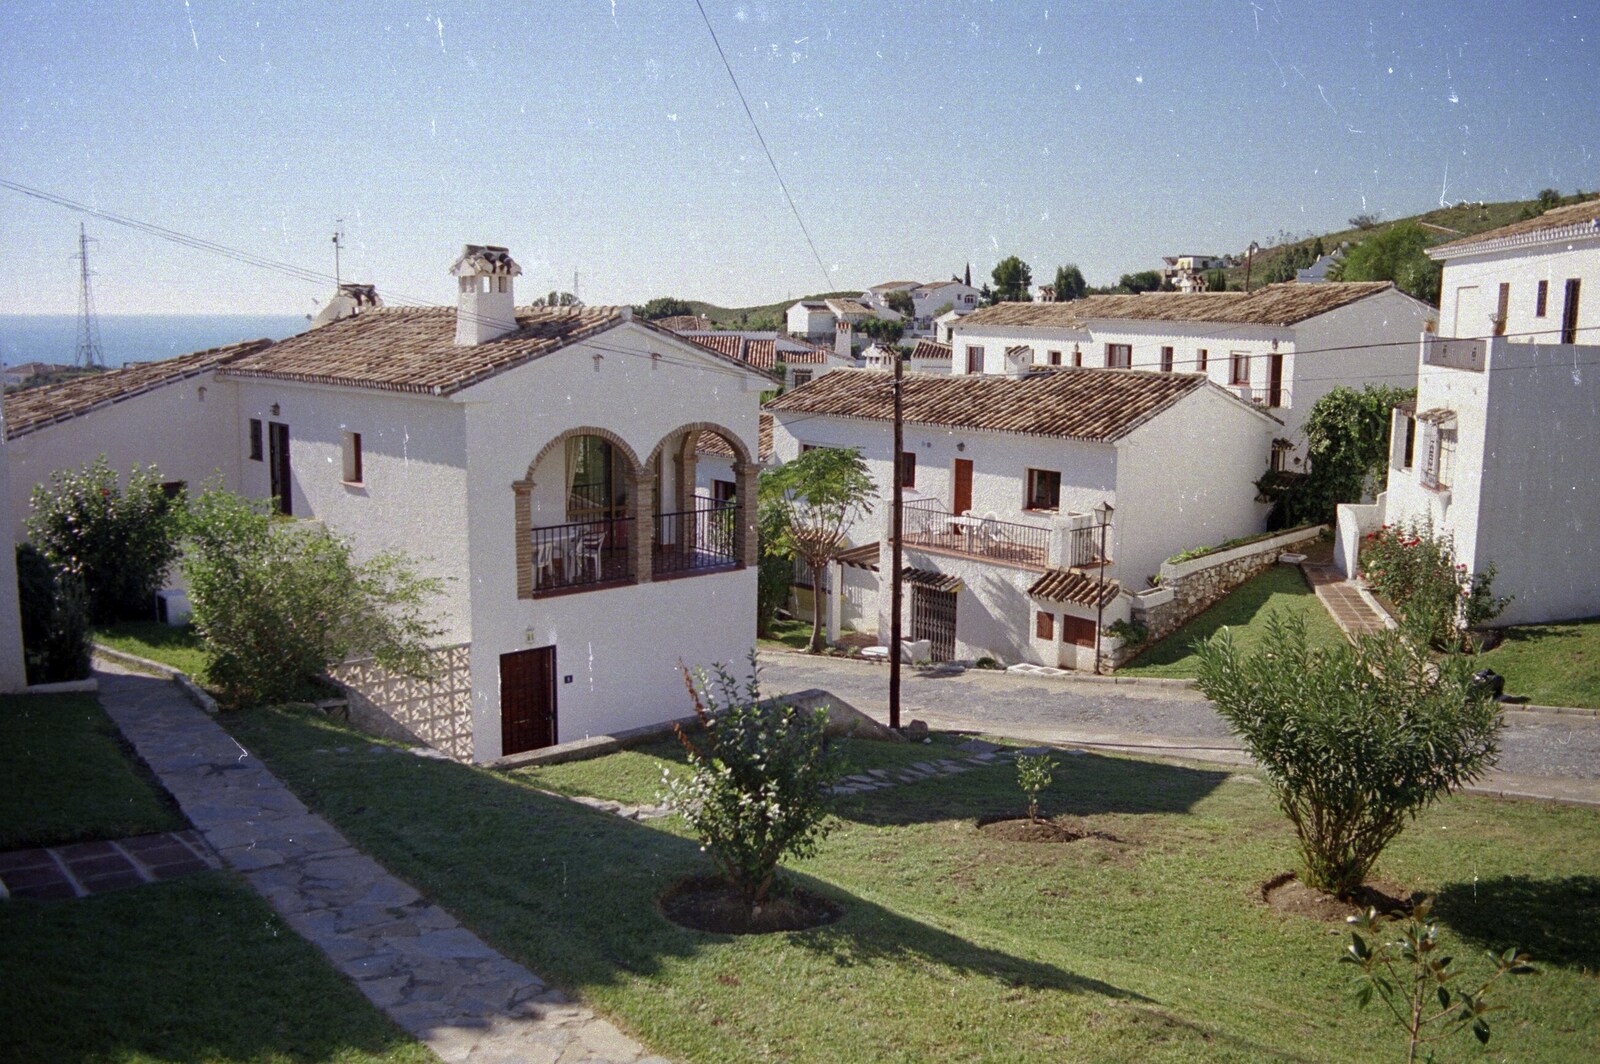 The apartments up the hill from The CISU Massive do Malaga, Spain - November 14th 1998